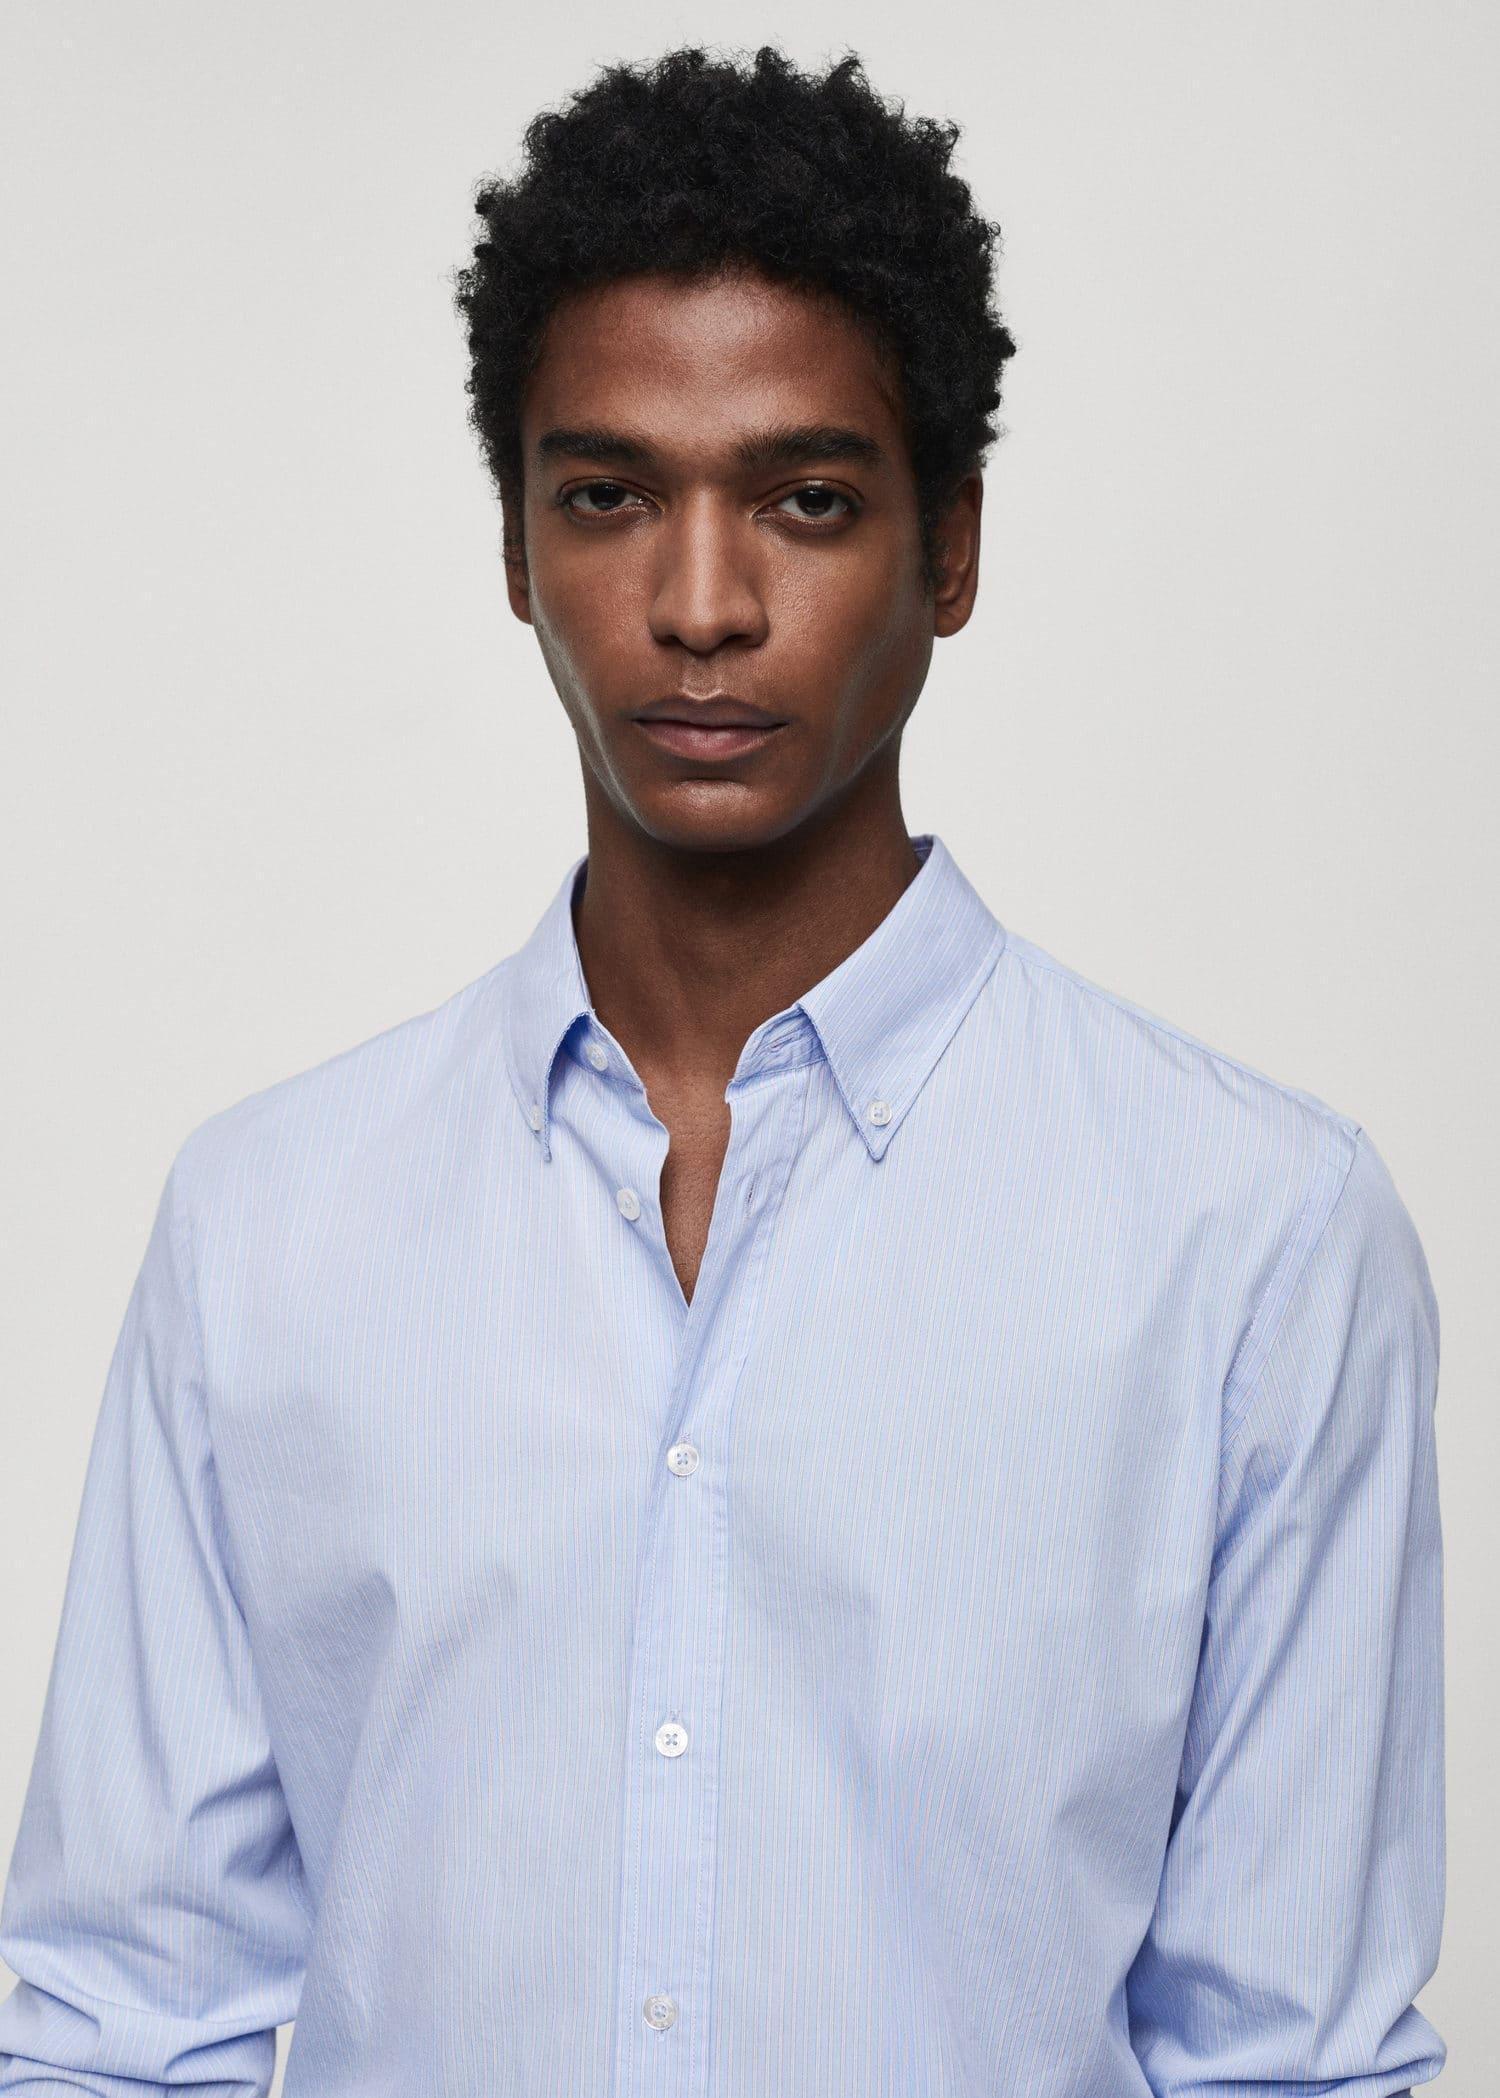 Mango - Blue Lt-Pastel Striped Cotton Shirt